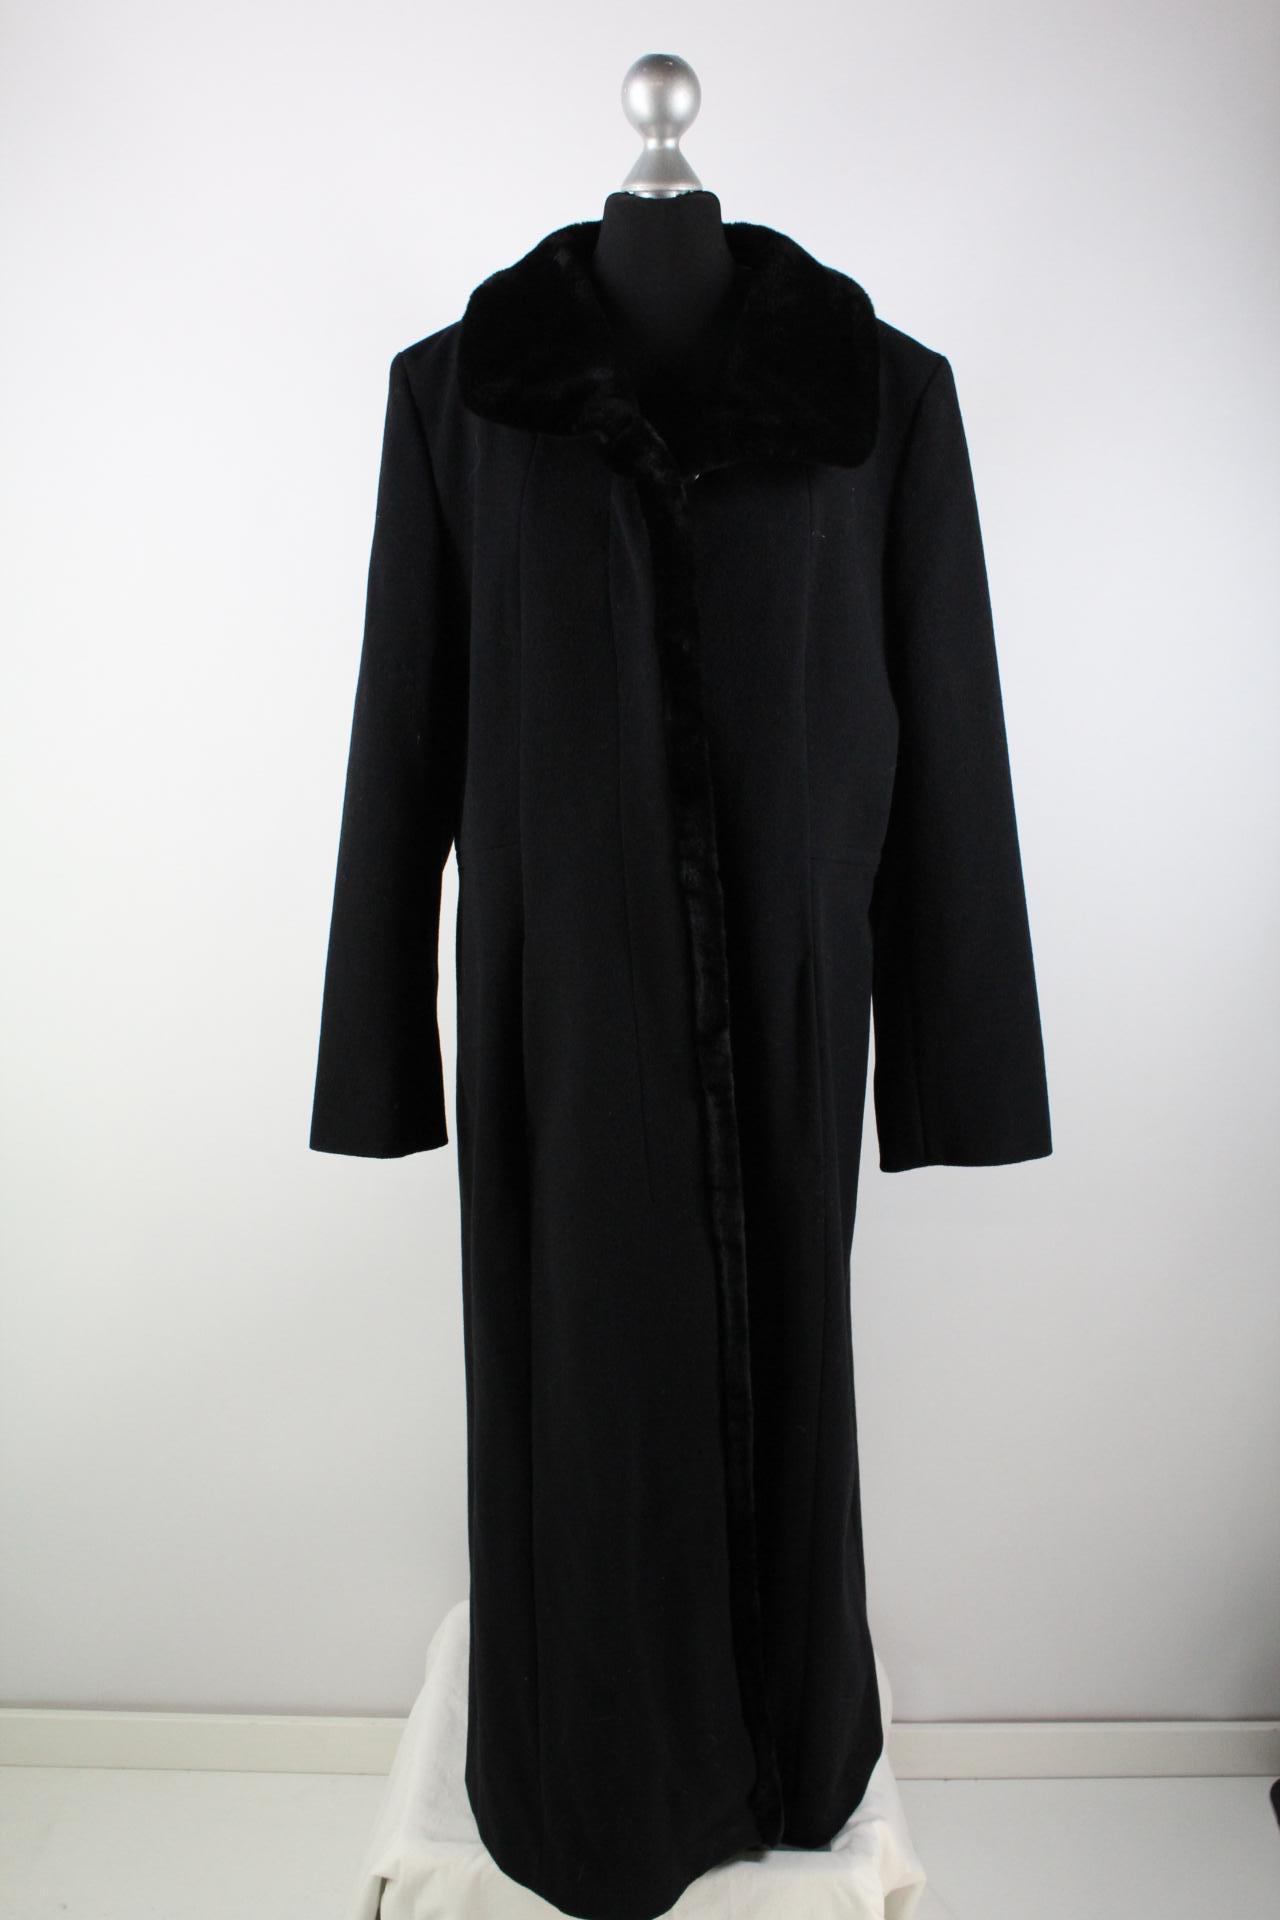 Michele Boyard Damen-Mantel schwarz Größe 42